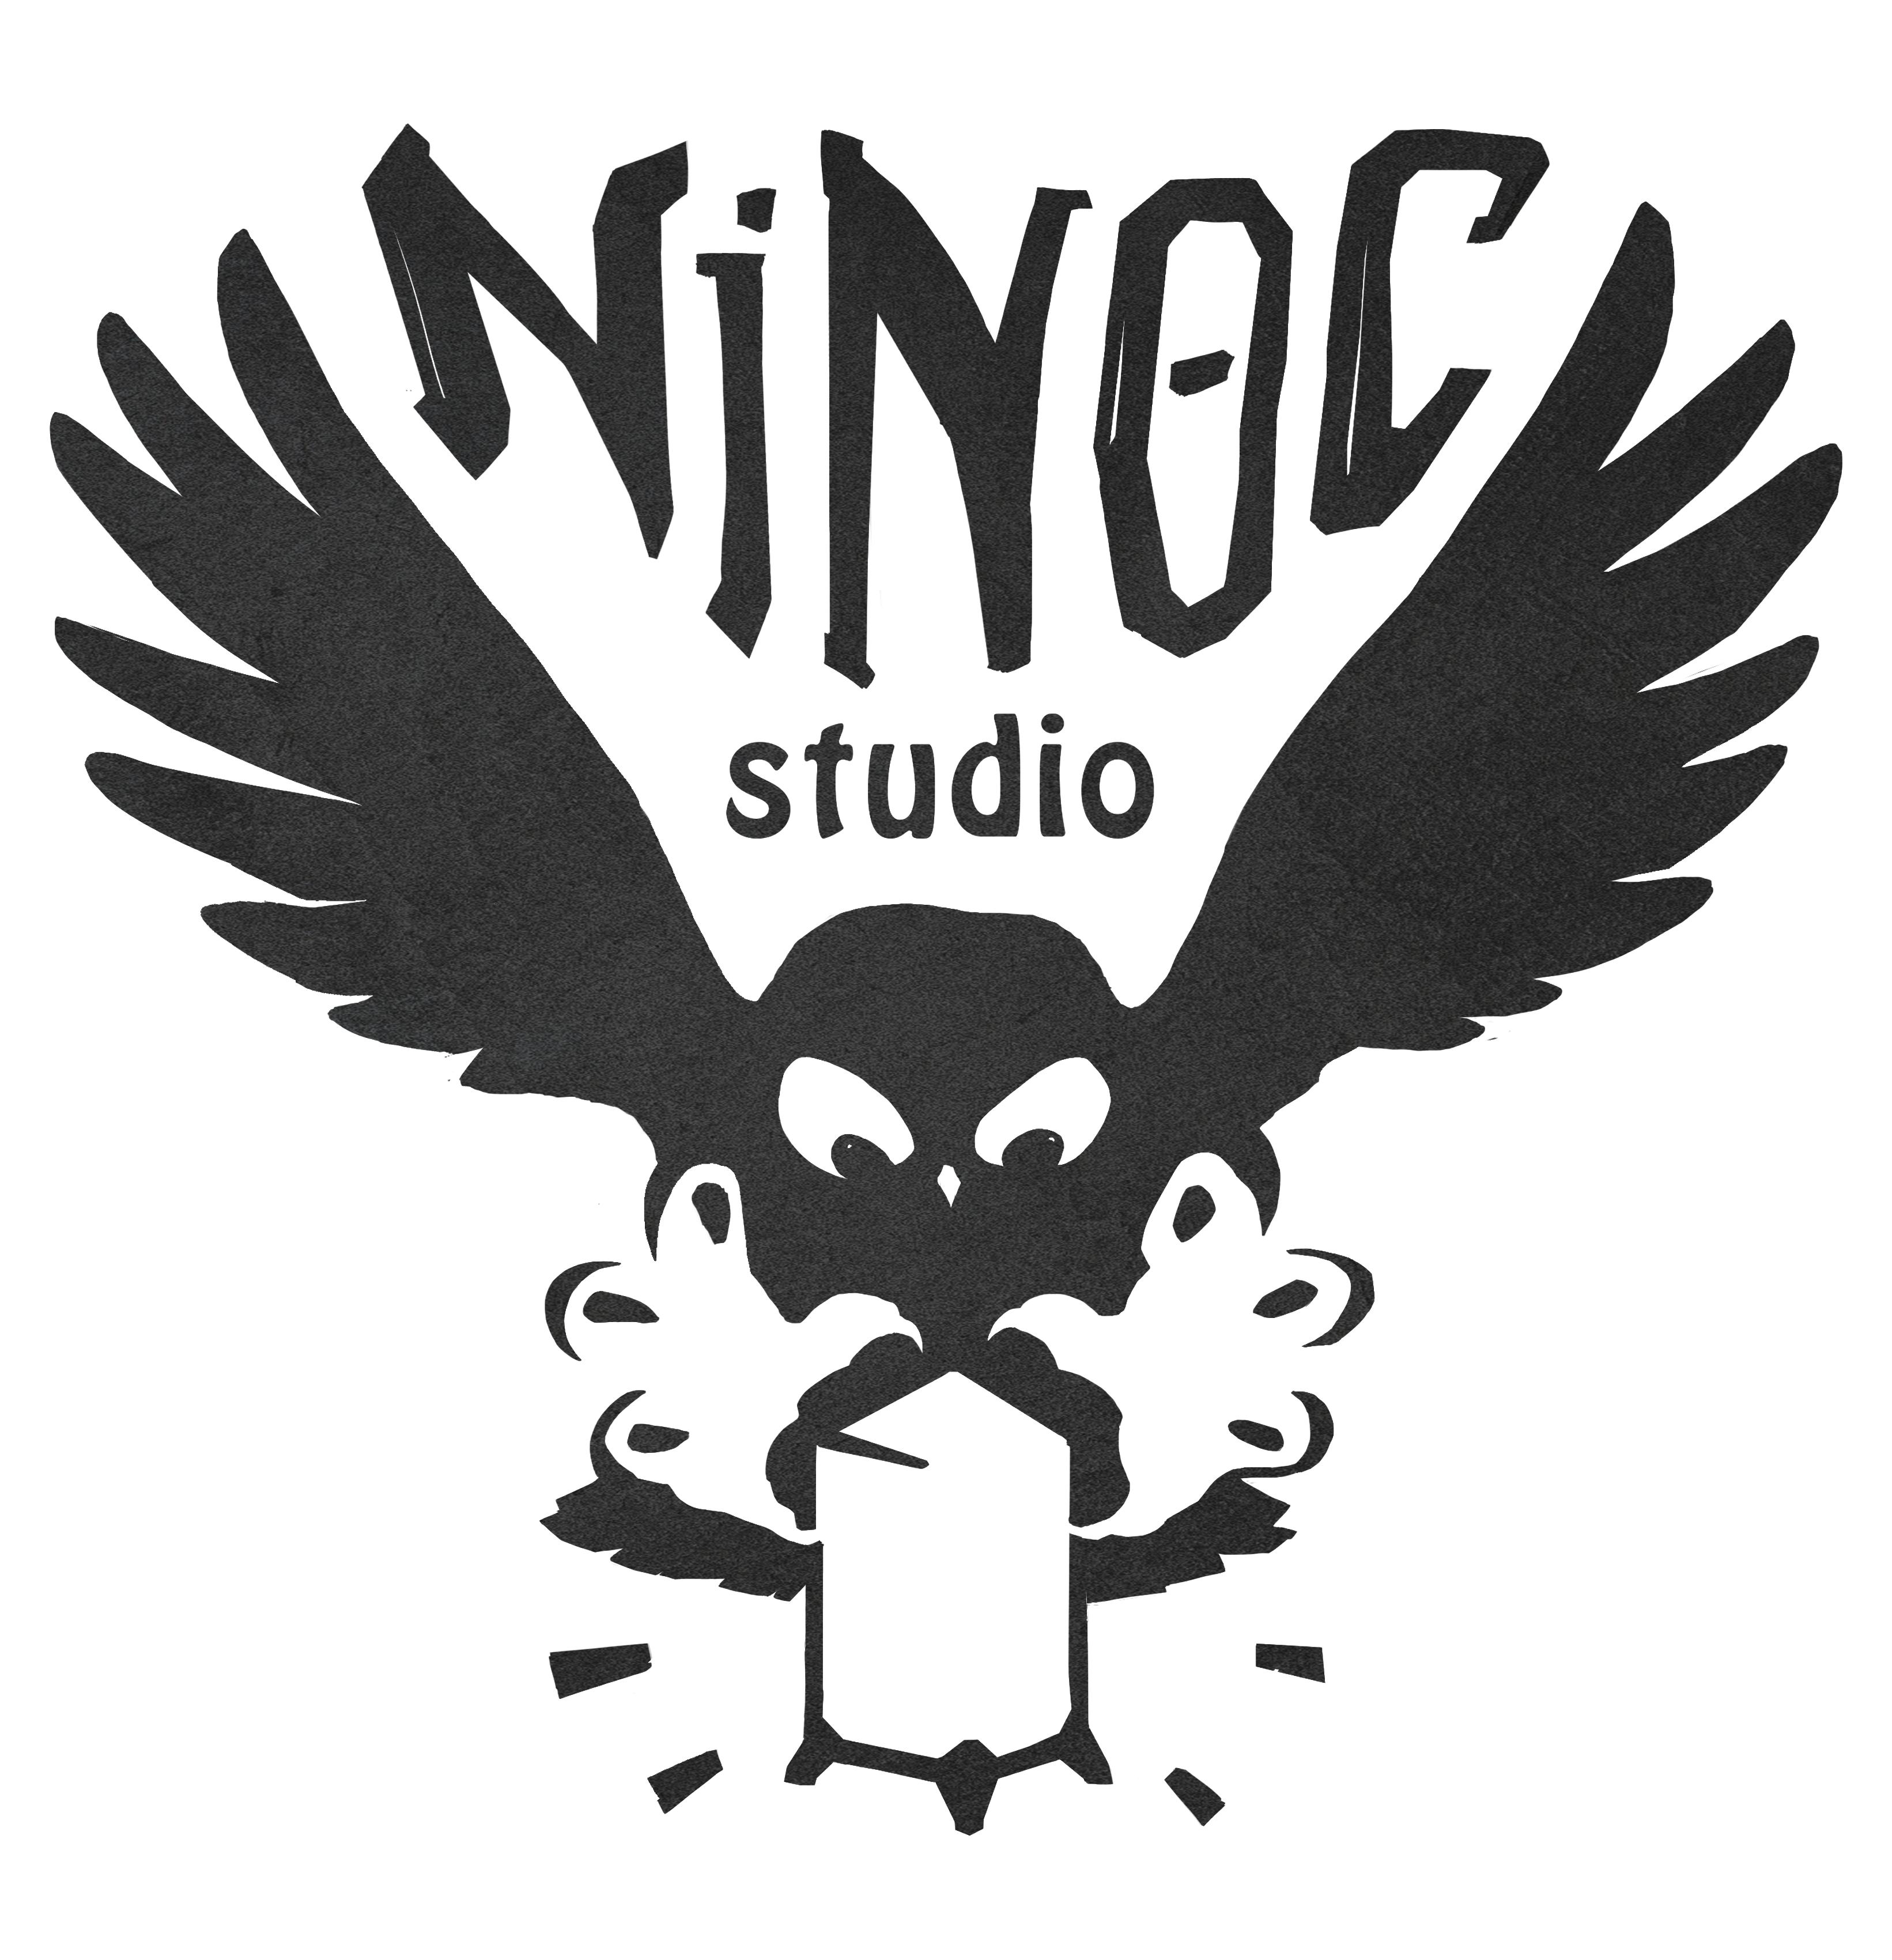 Ninoc Studio